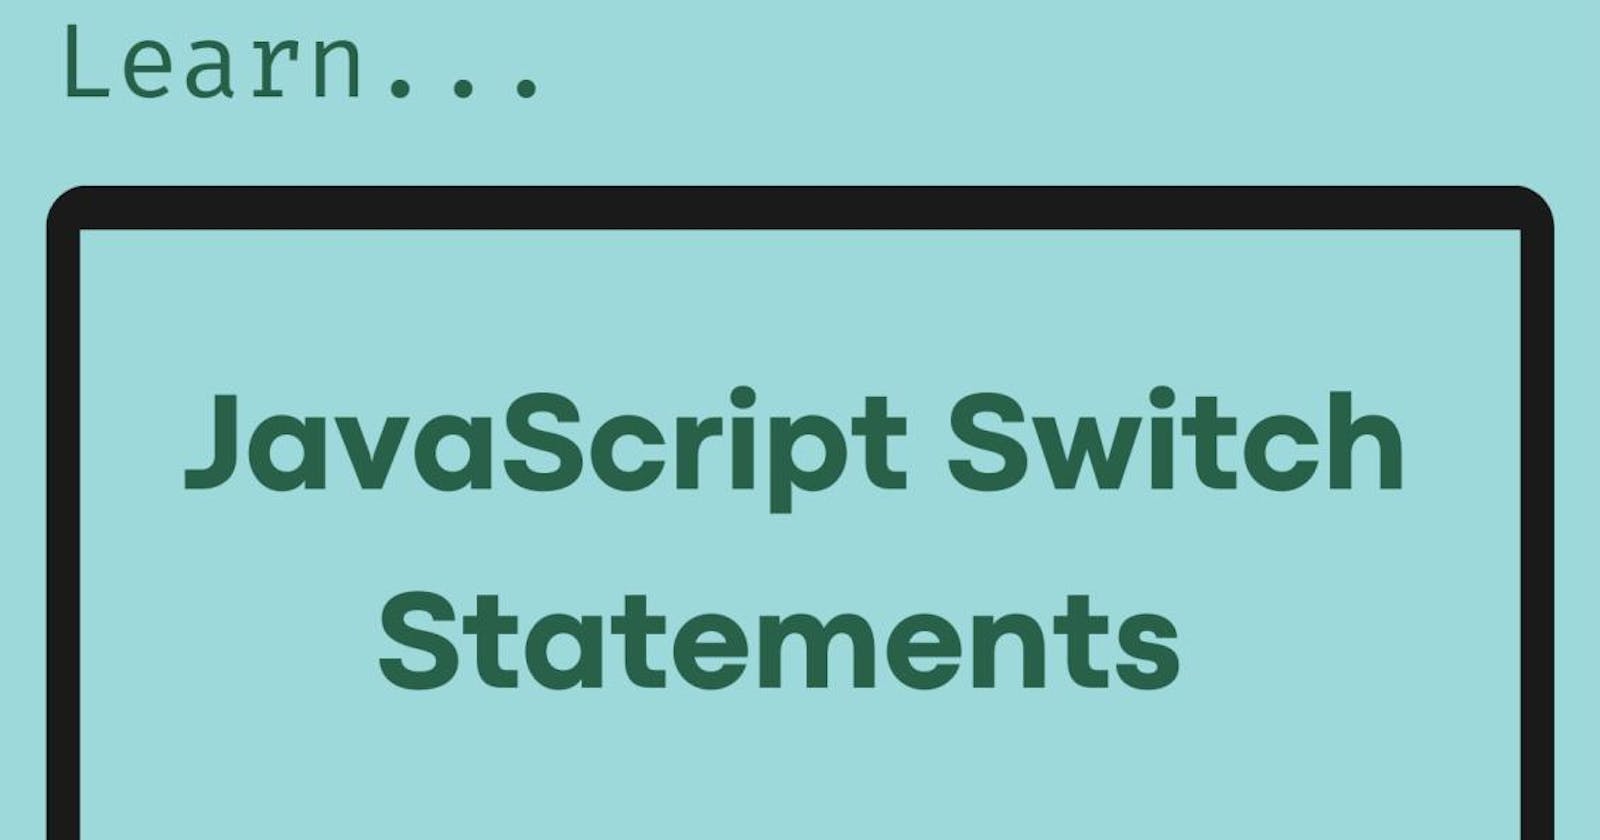 JavaScript Switch Statement